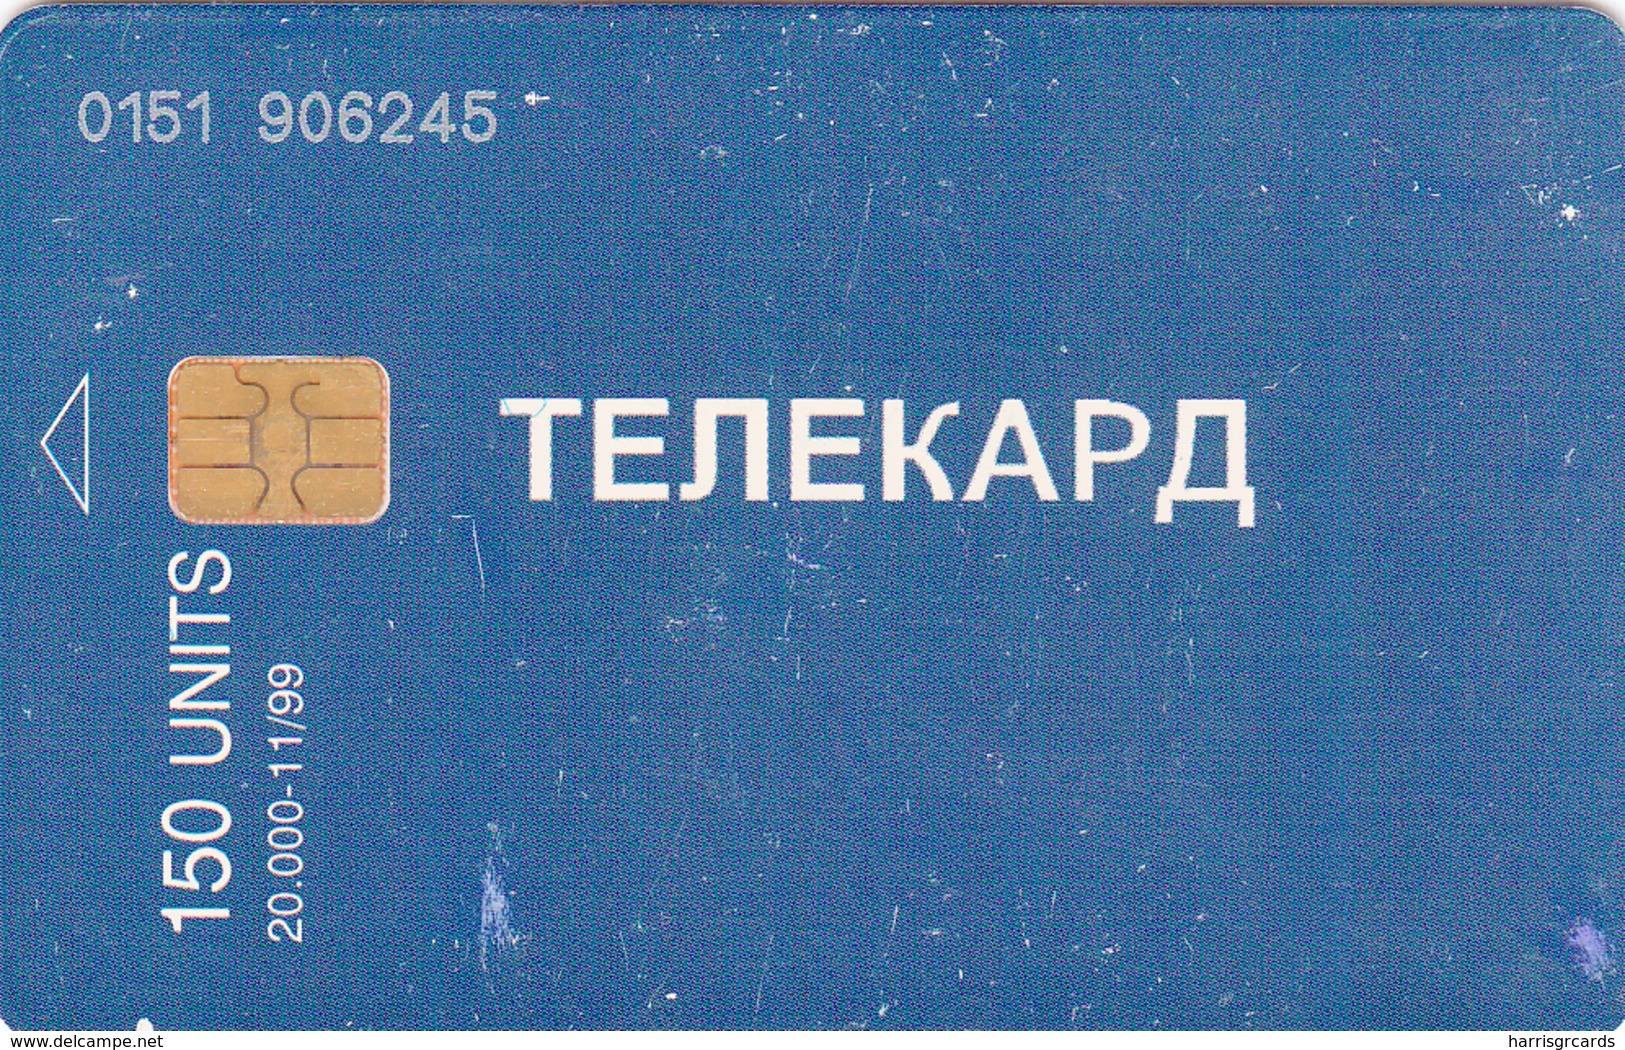 BOSNIA - Republica Srpska Telecard, Blue Card, 11/99, 150 U, Tirage 20,000, Used As Scan - Bosnië